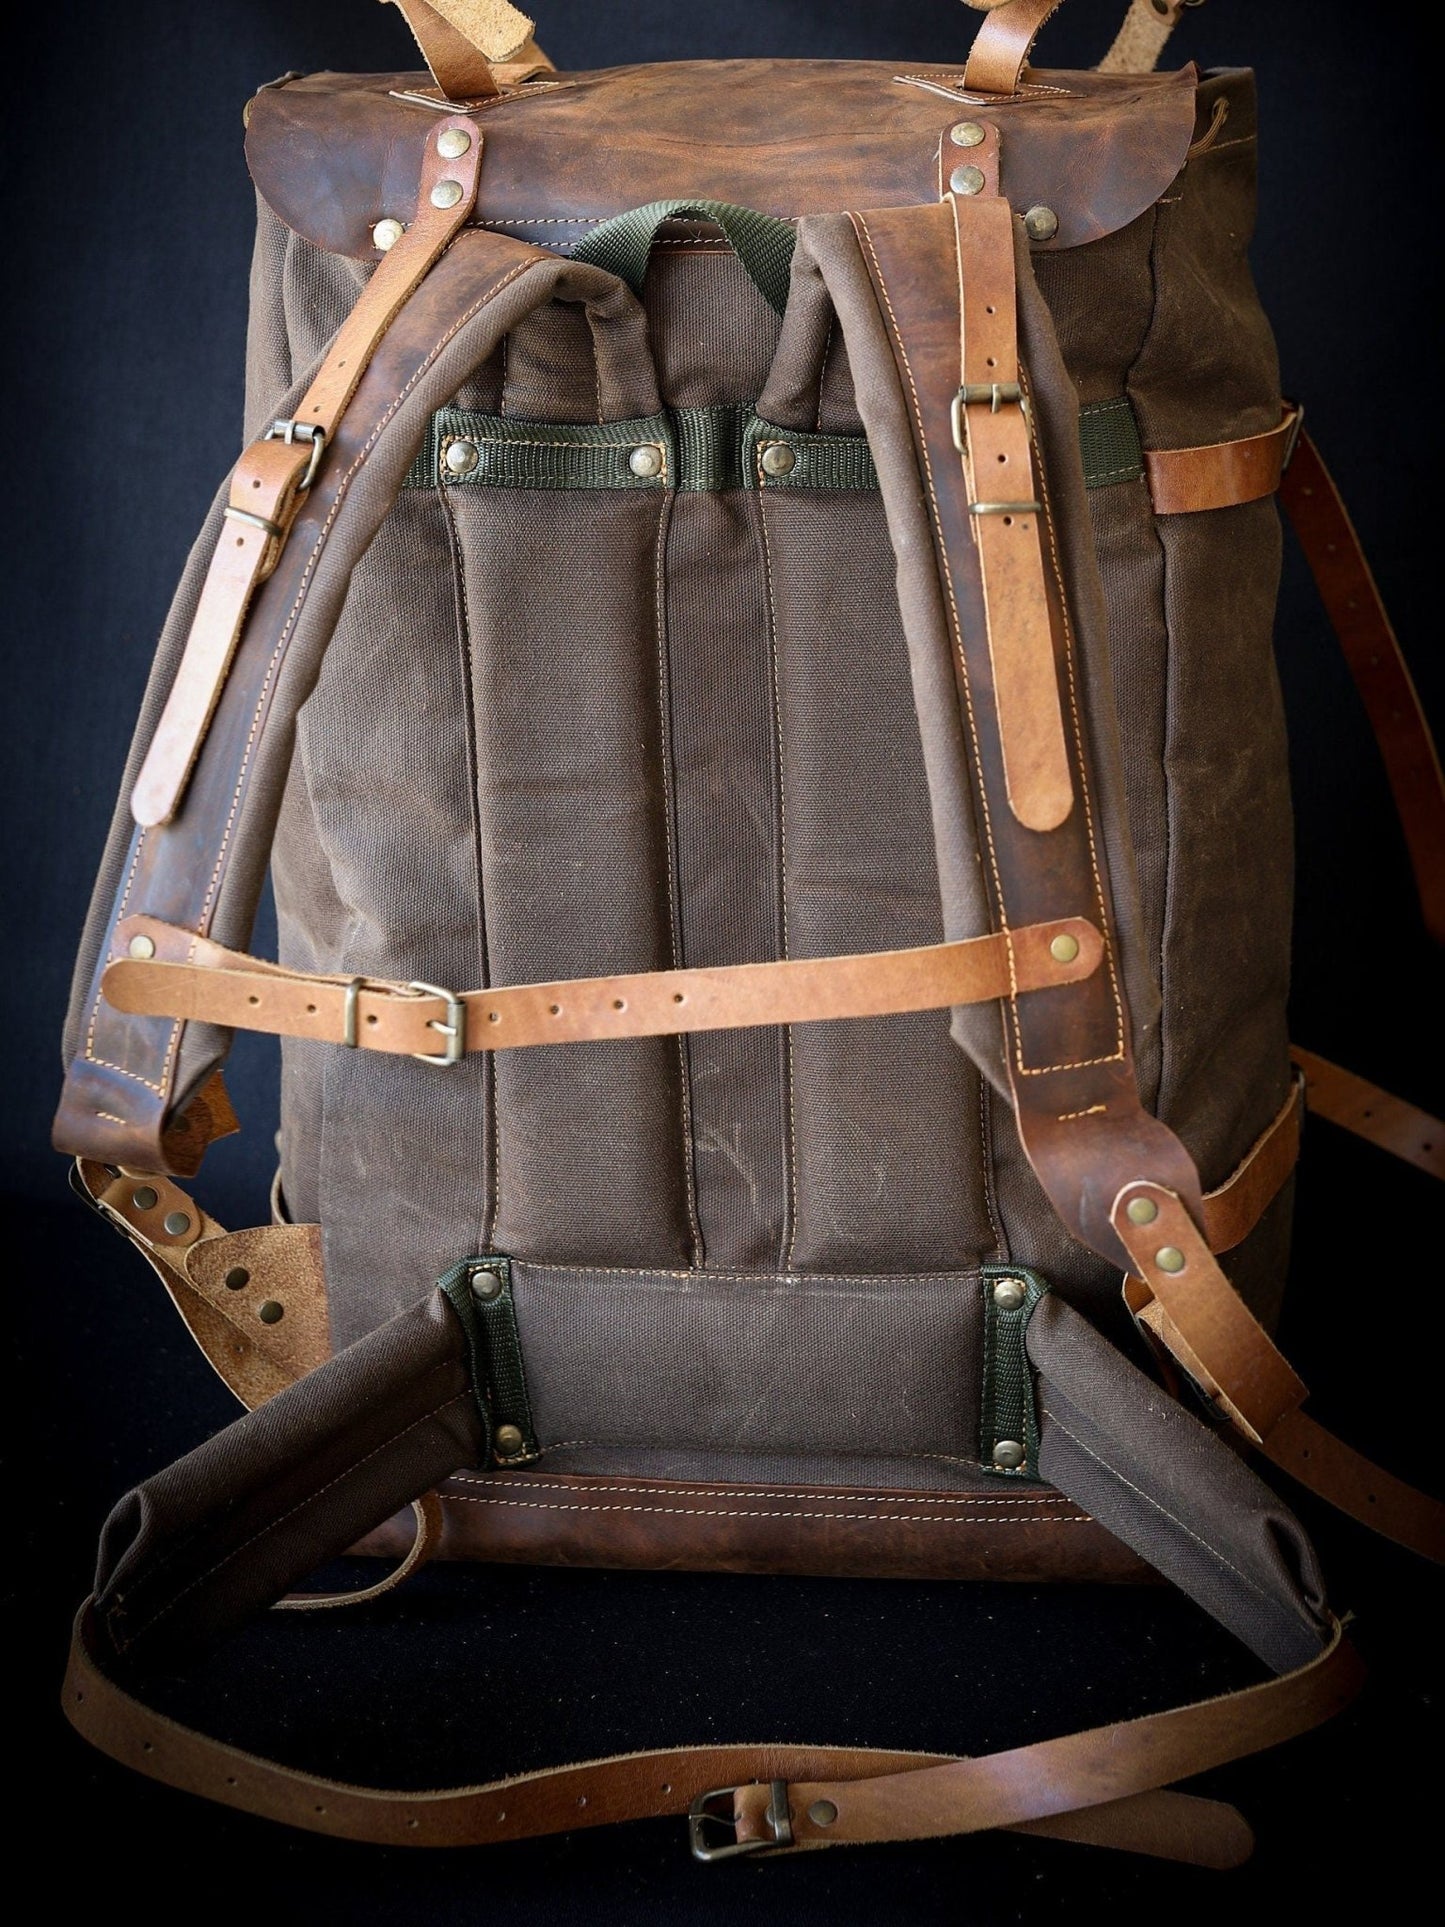 Bushcraft Handmade Waxed Canvas Backpack | Leather Backpack | Travel | Camping | Fishing | Hunting | Bushcraft Rucksack | Personalized Gifts bushcraft - camping - hiking backpack 99percenthandmade   